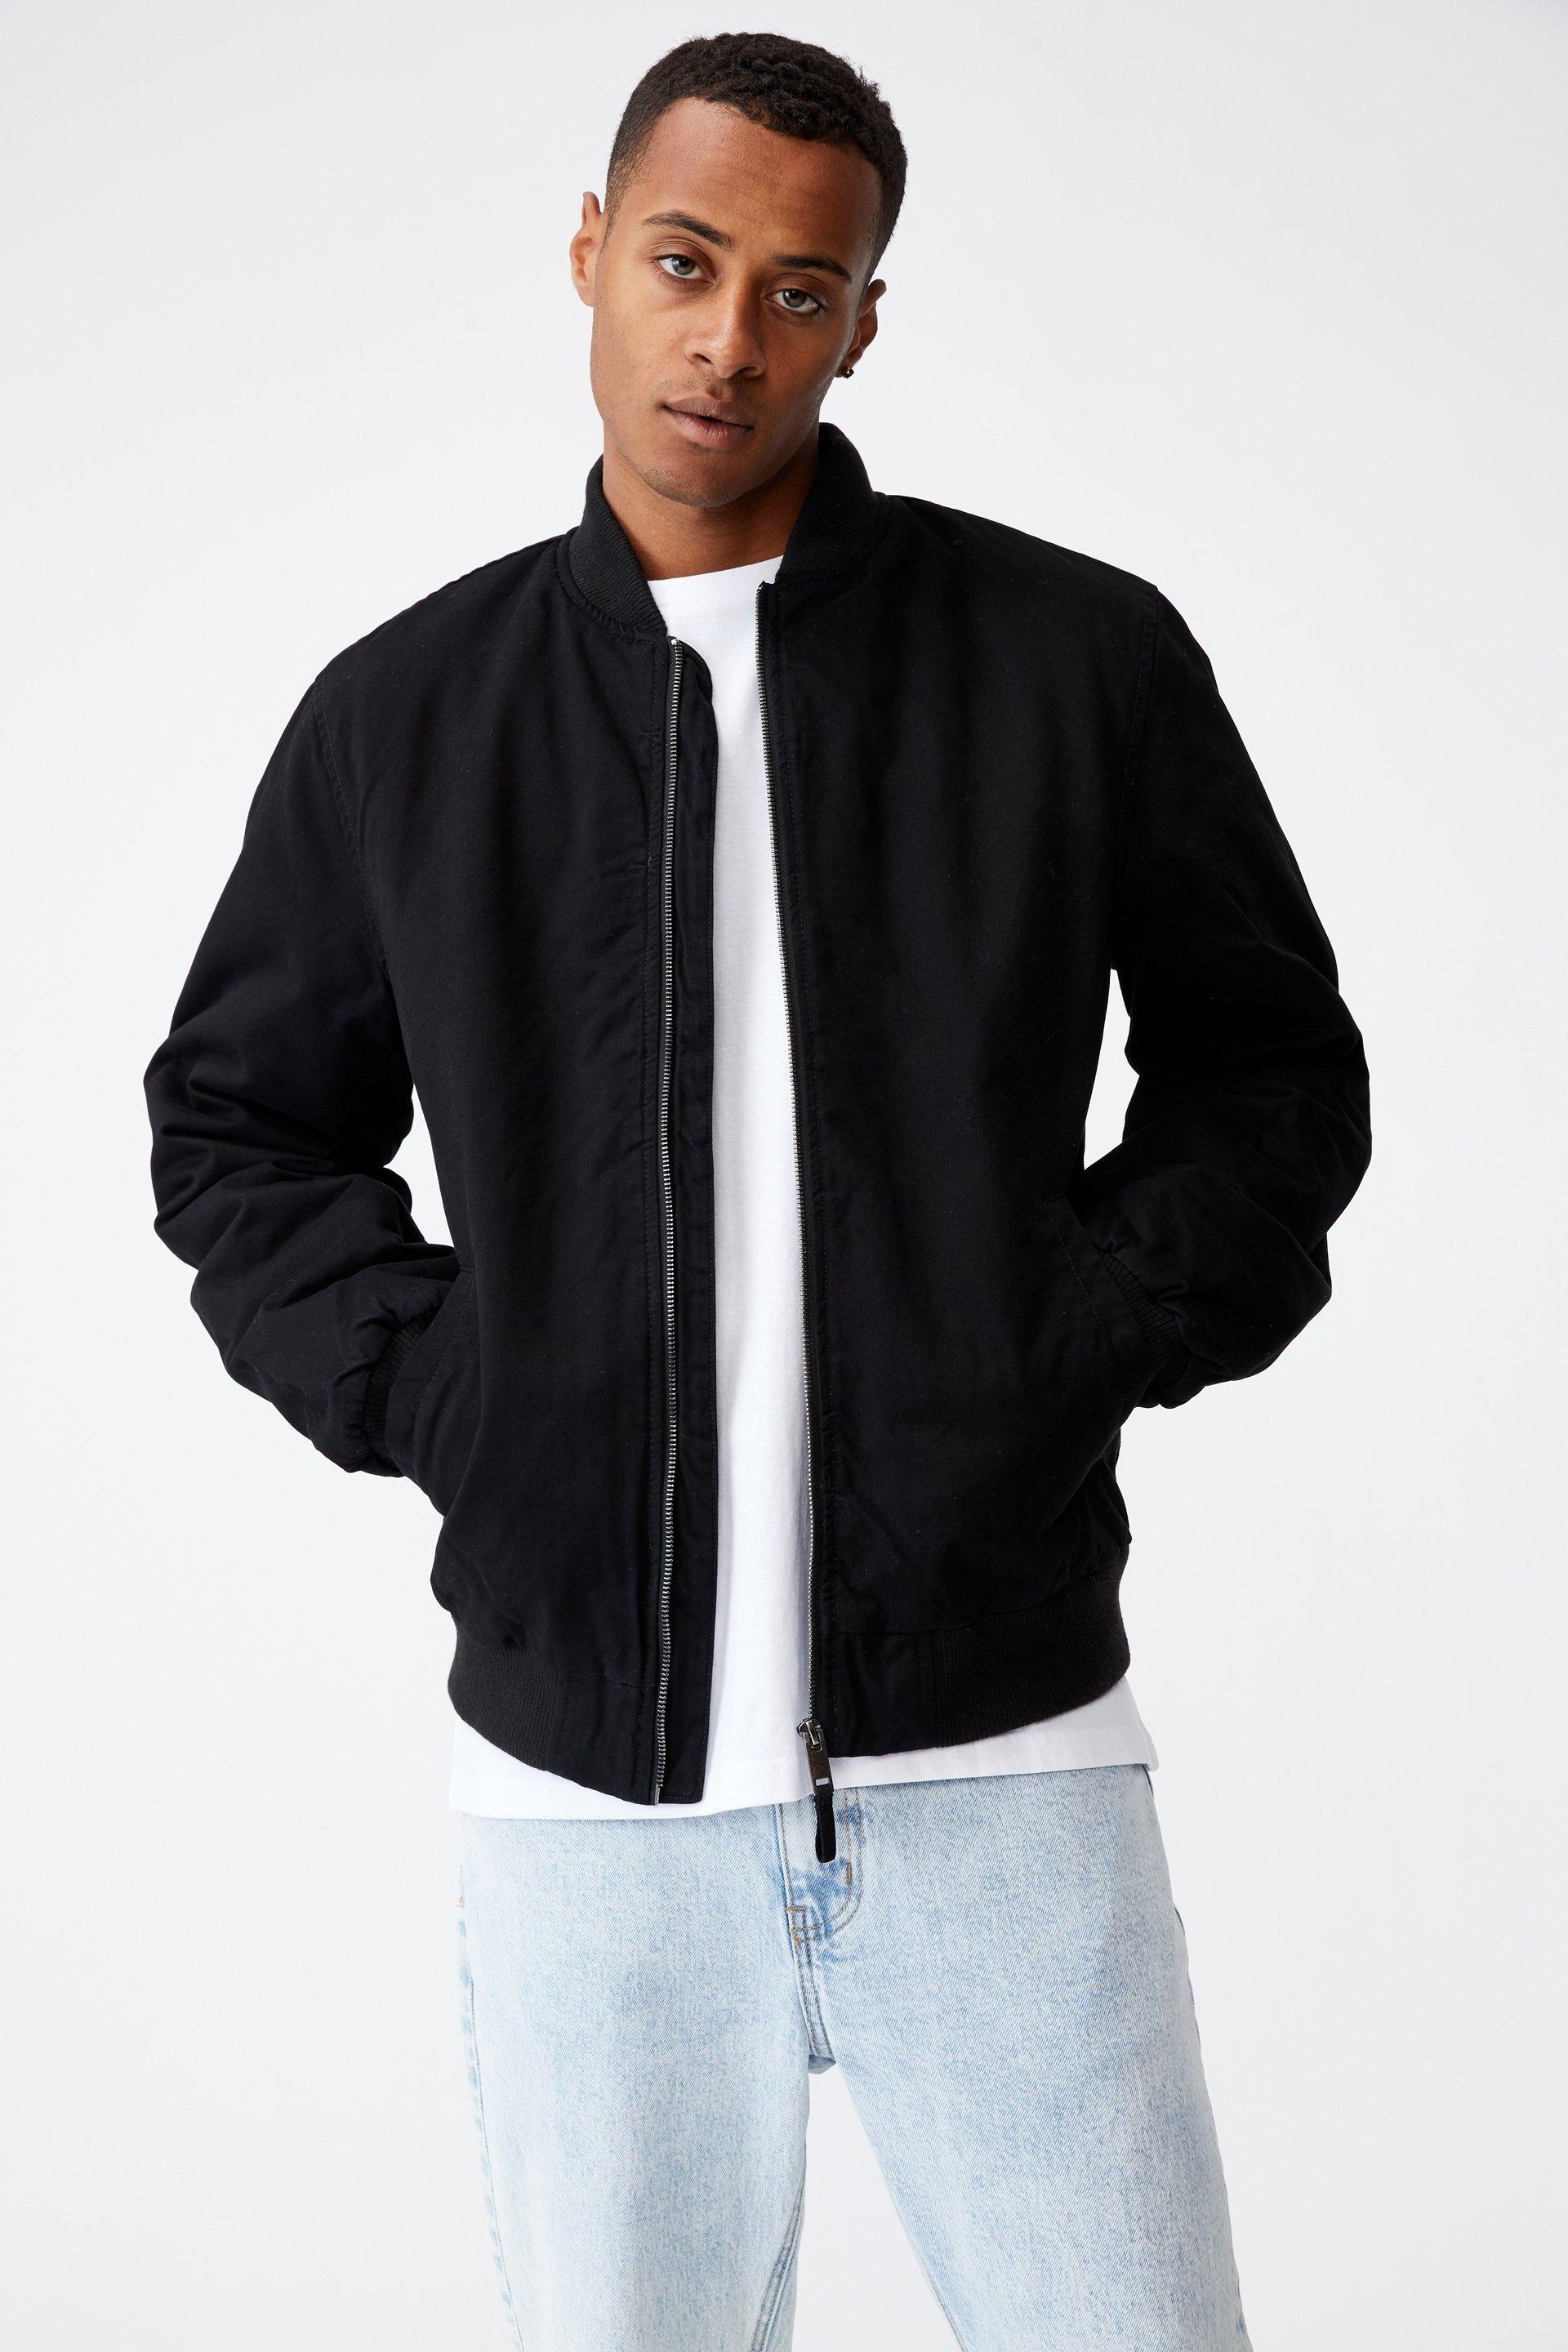 Twill bomber jacket - black Cotton On Jackets | Superbalist.com